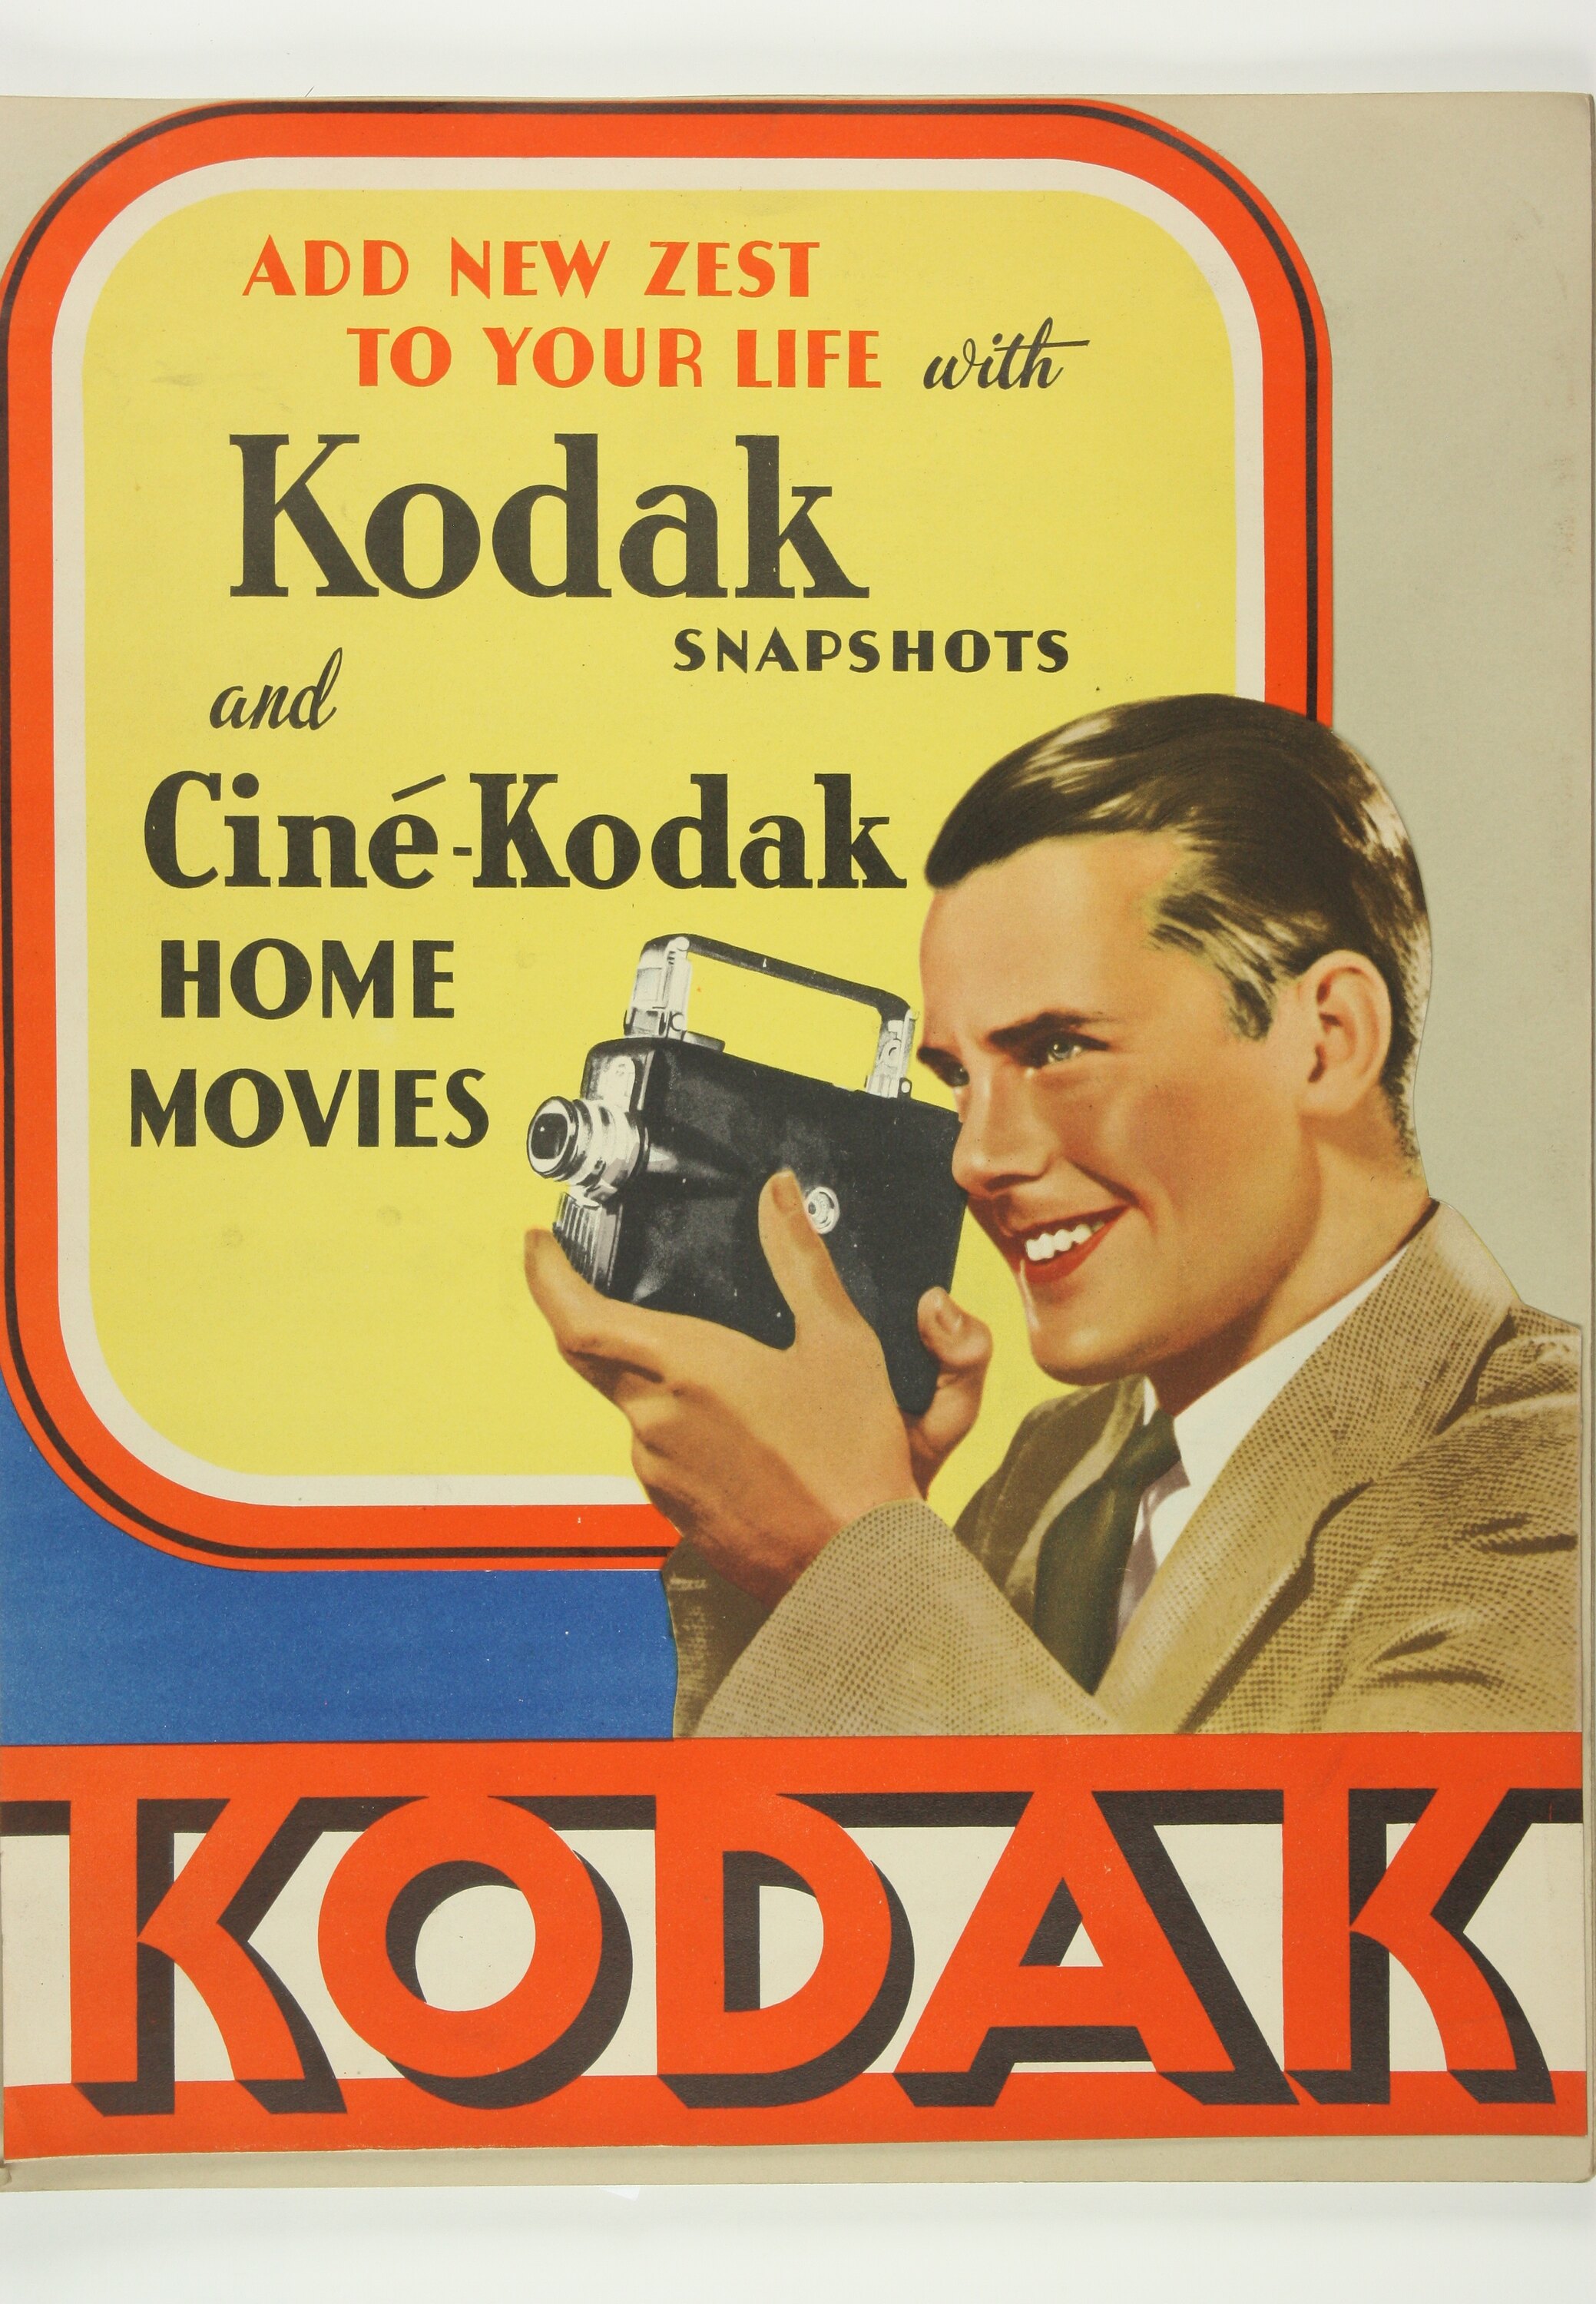 Kodak Advertising in Australasia, 1940s-1970s